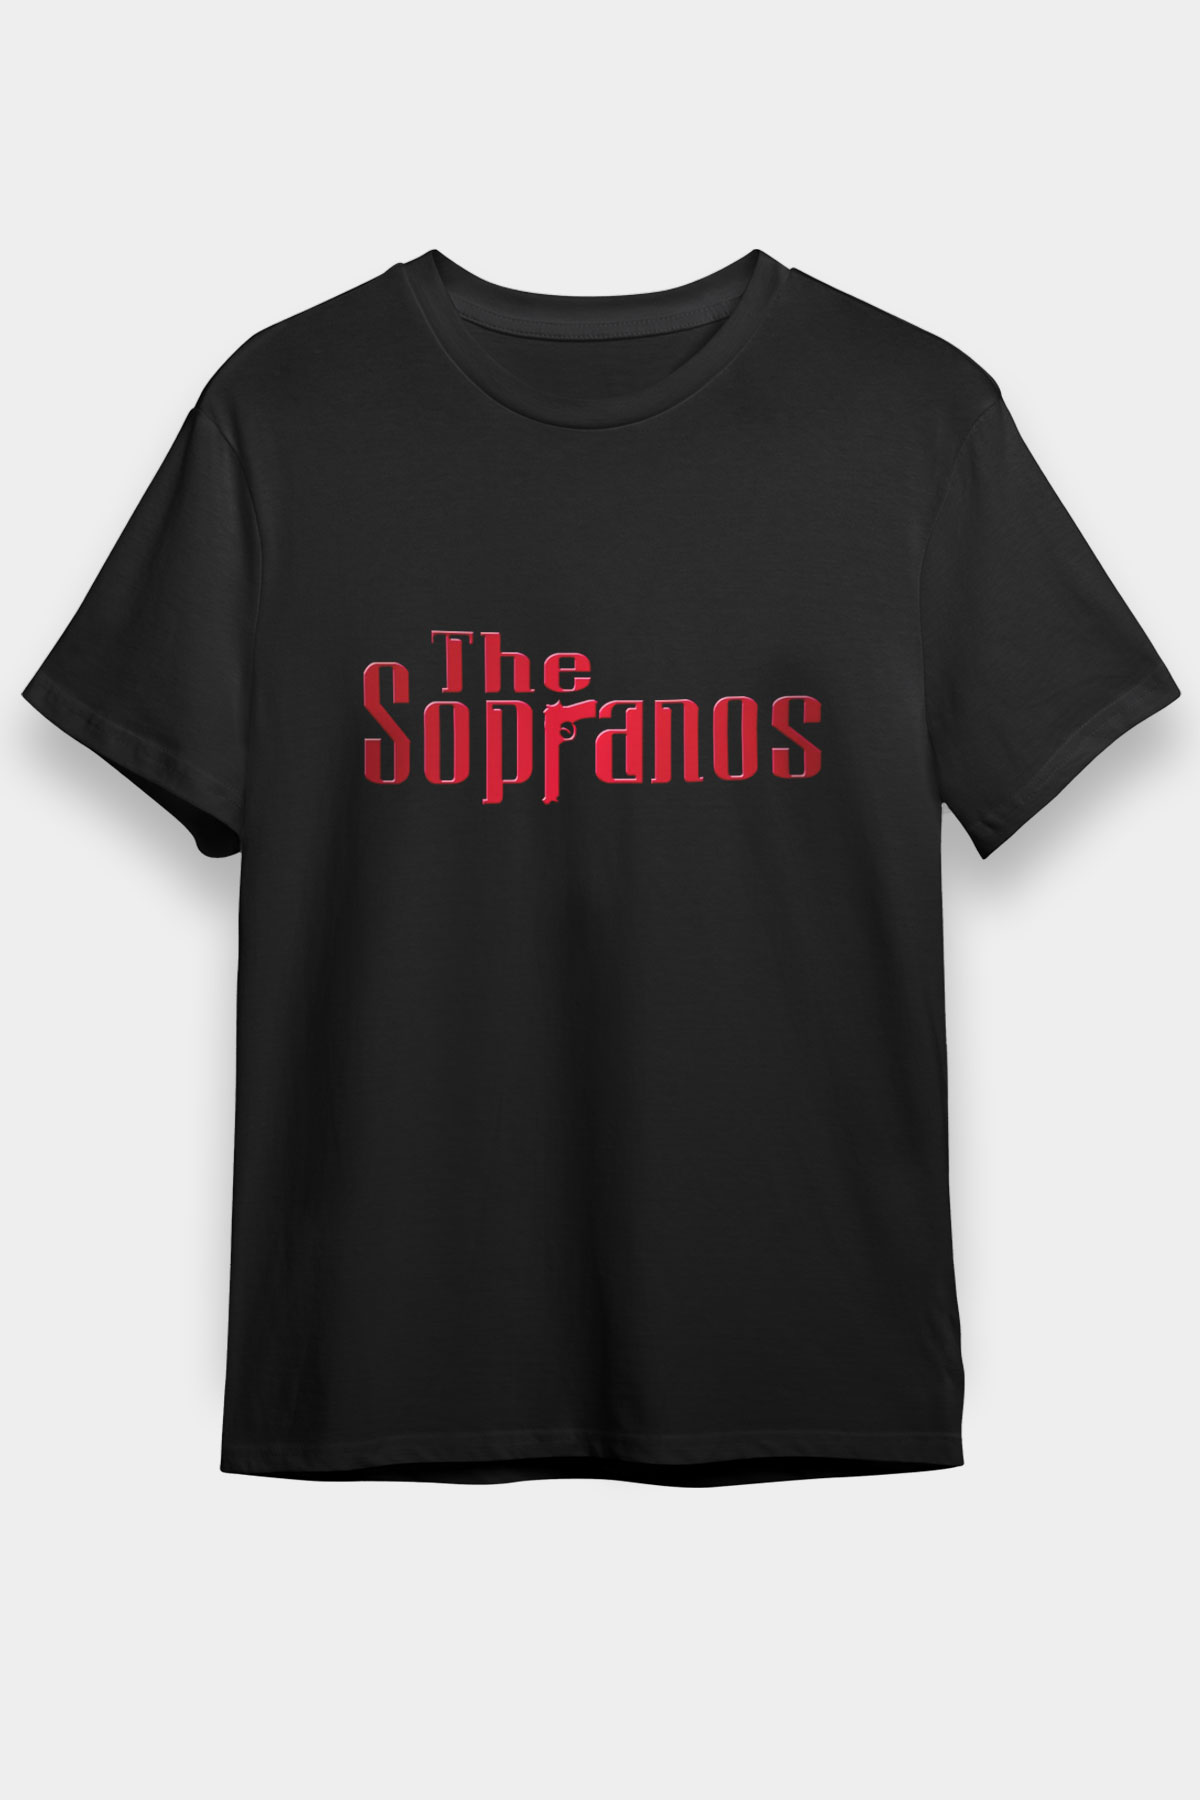 The Sopranos T shirt,Movie , Tv and Games Tshirt